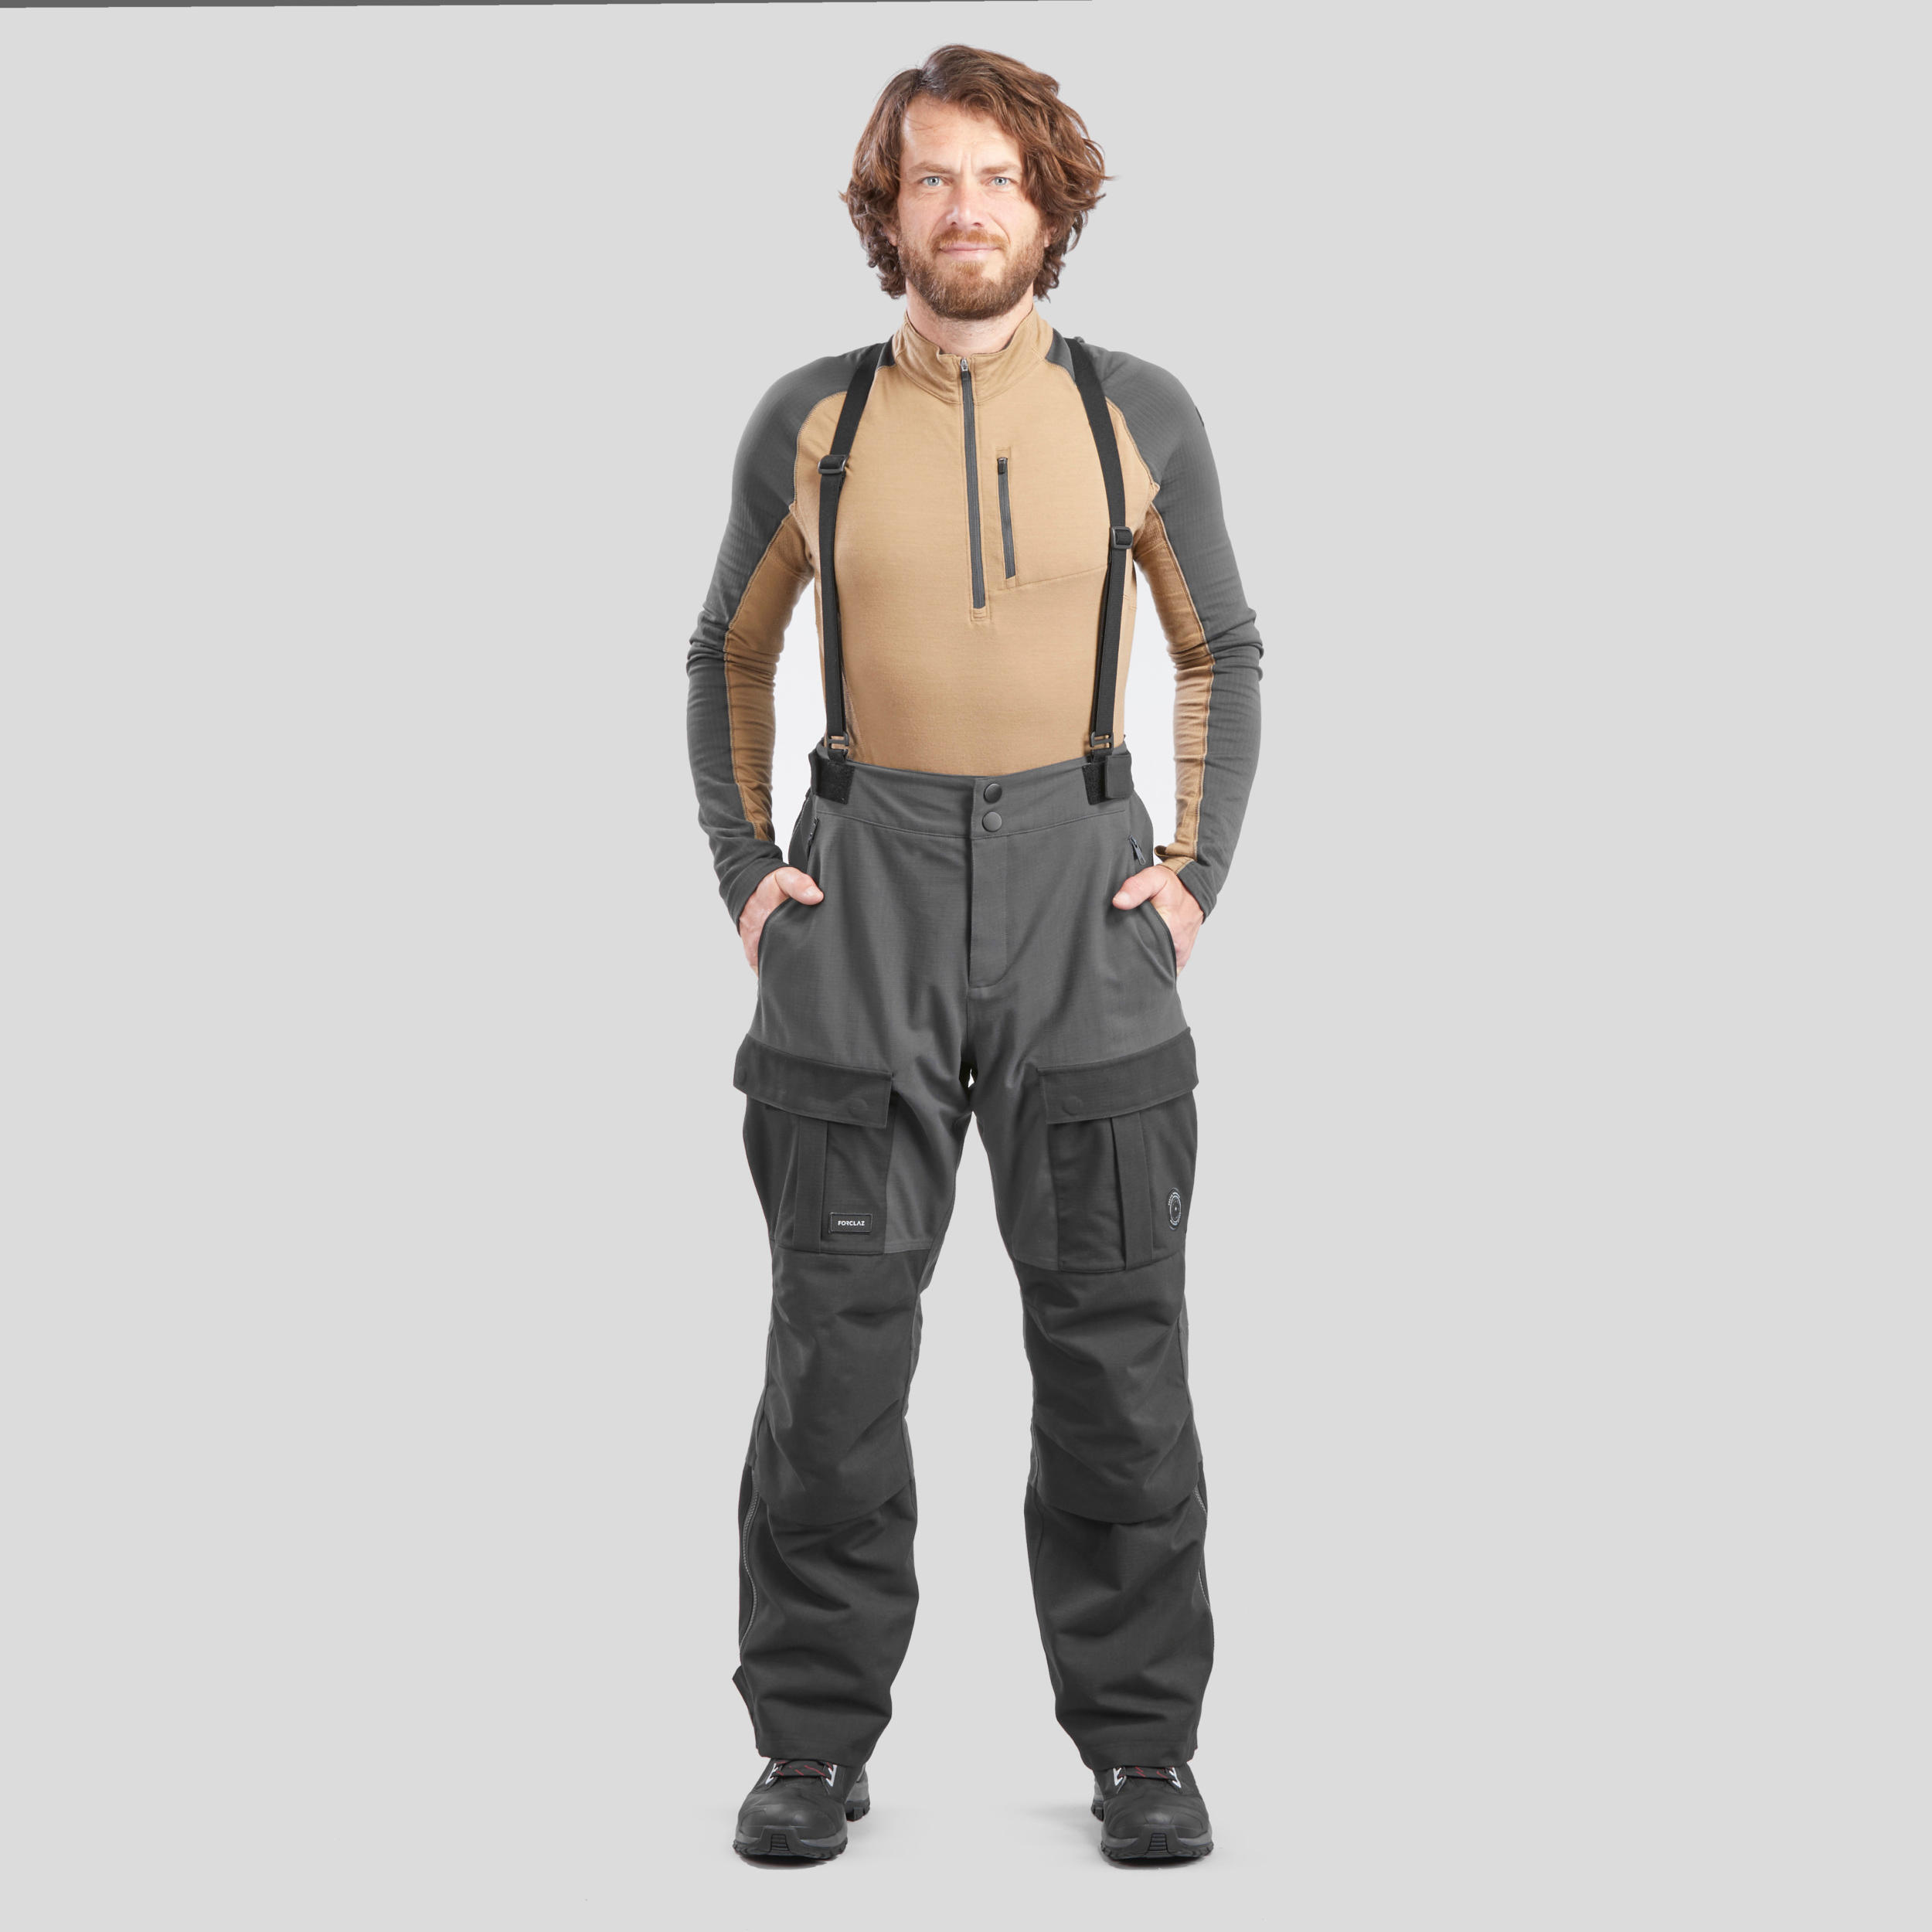 Warm and waterproof trekking trousers - Artic 900 - unisex 2/19